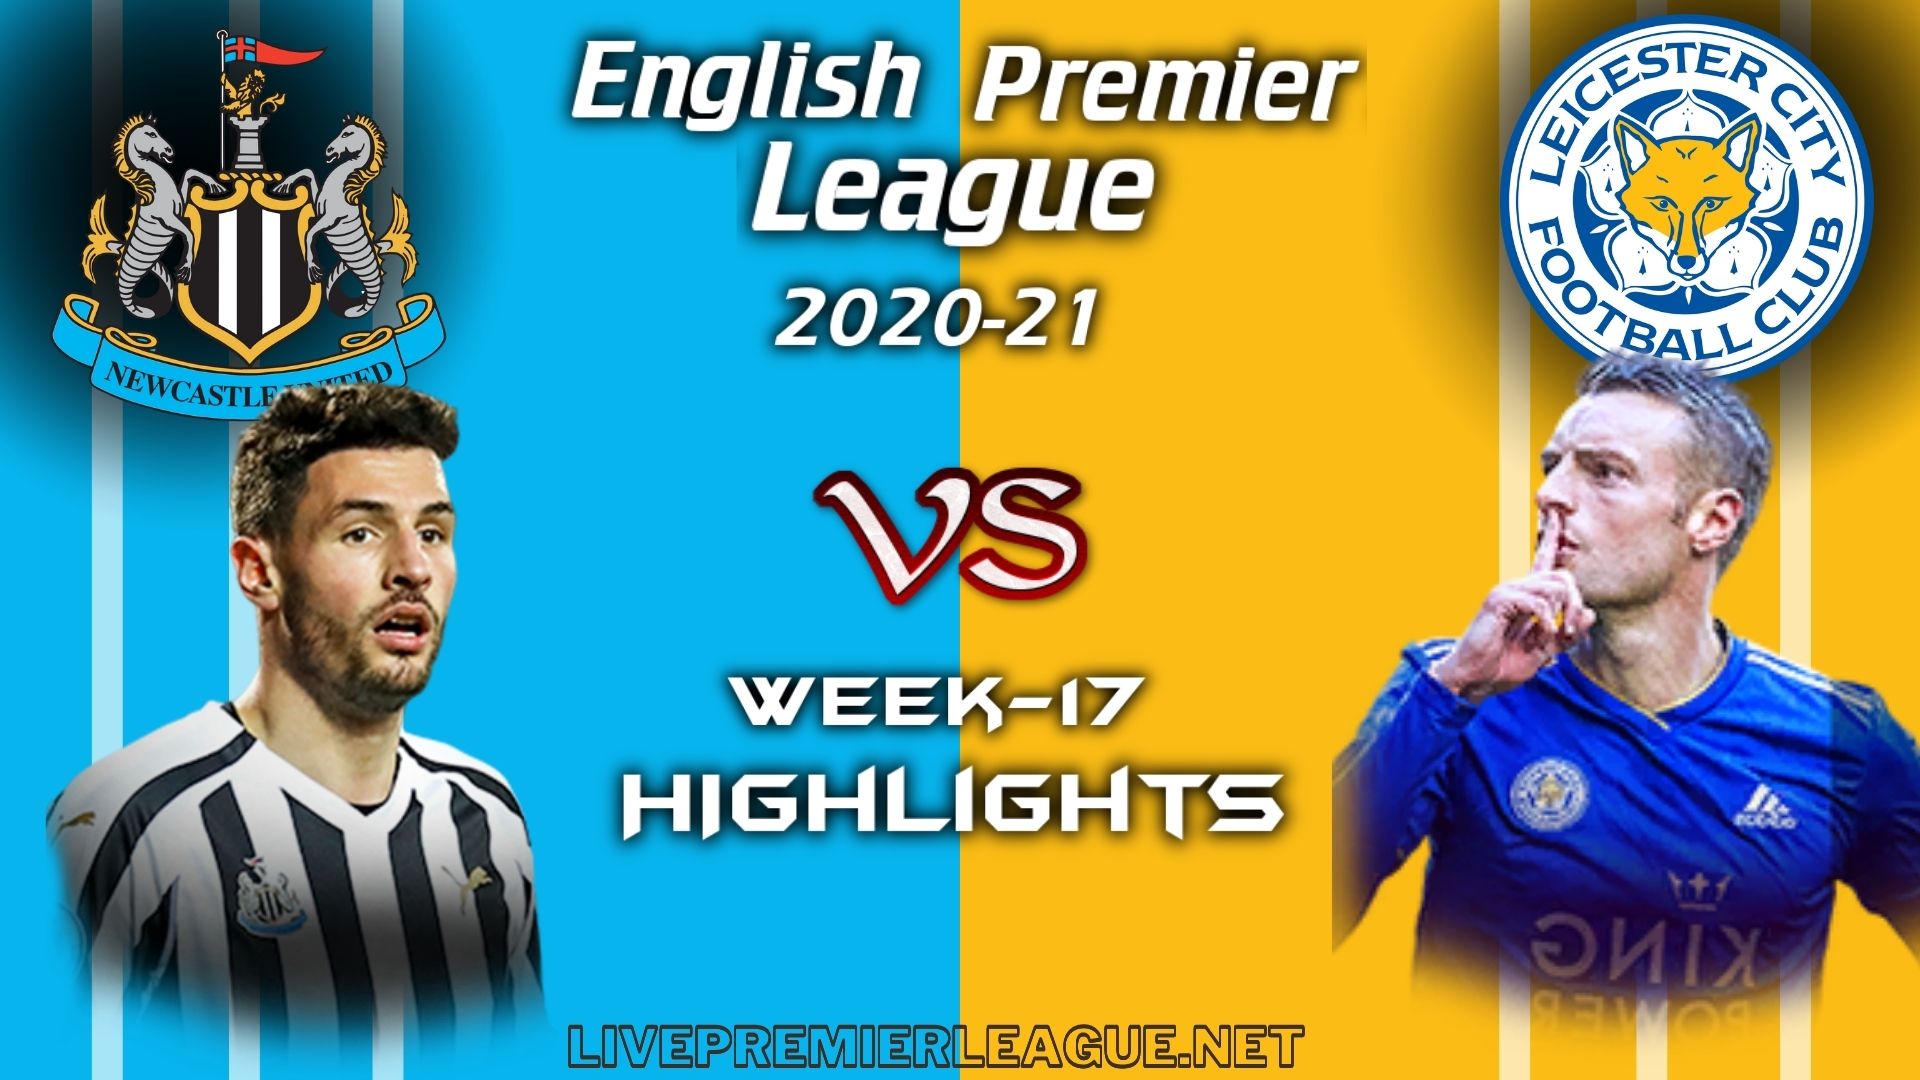 Live Premier League - Football Match 2021 Highlights, Full Match Replay